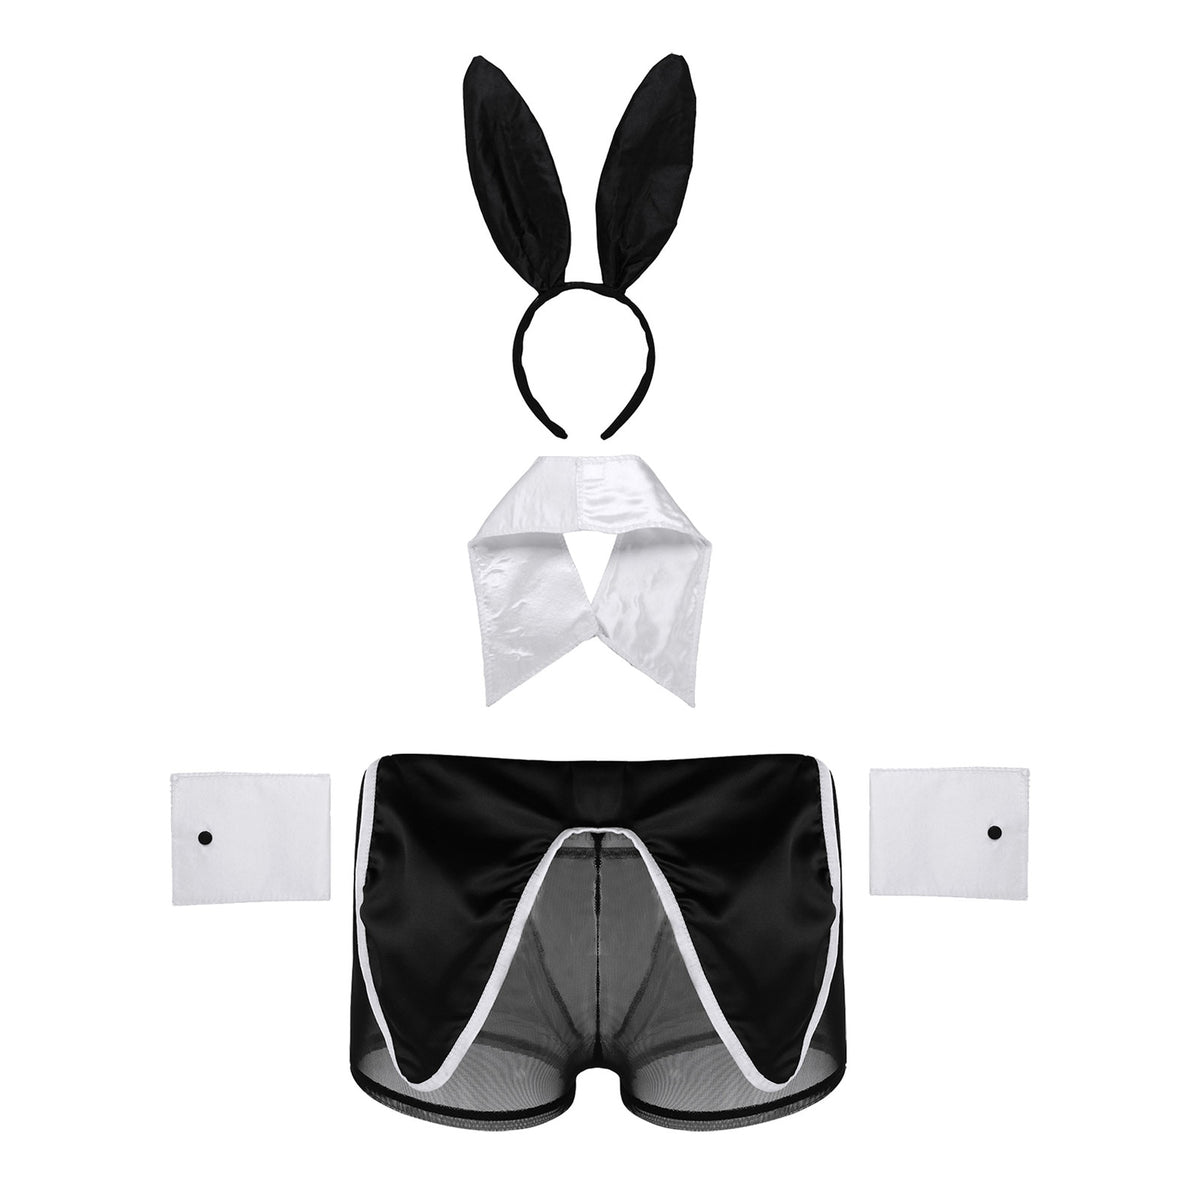 Men Waiter Tuxedo Lingerie Sexy Cosplay Costume Role Play Uniform See Through Briefs Underwear with Bunny Ears Headband Collar